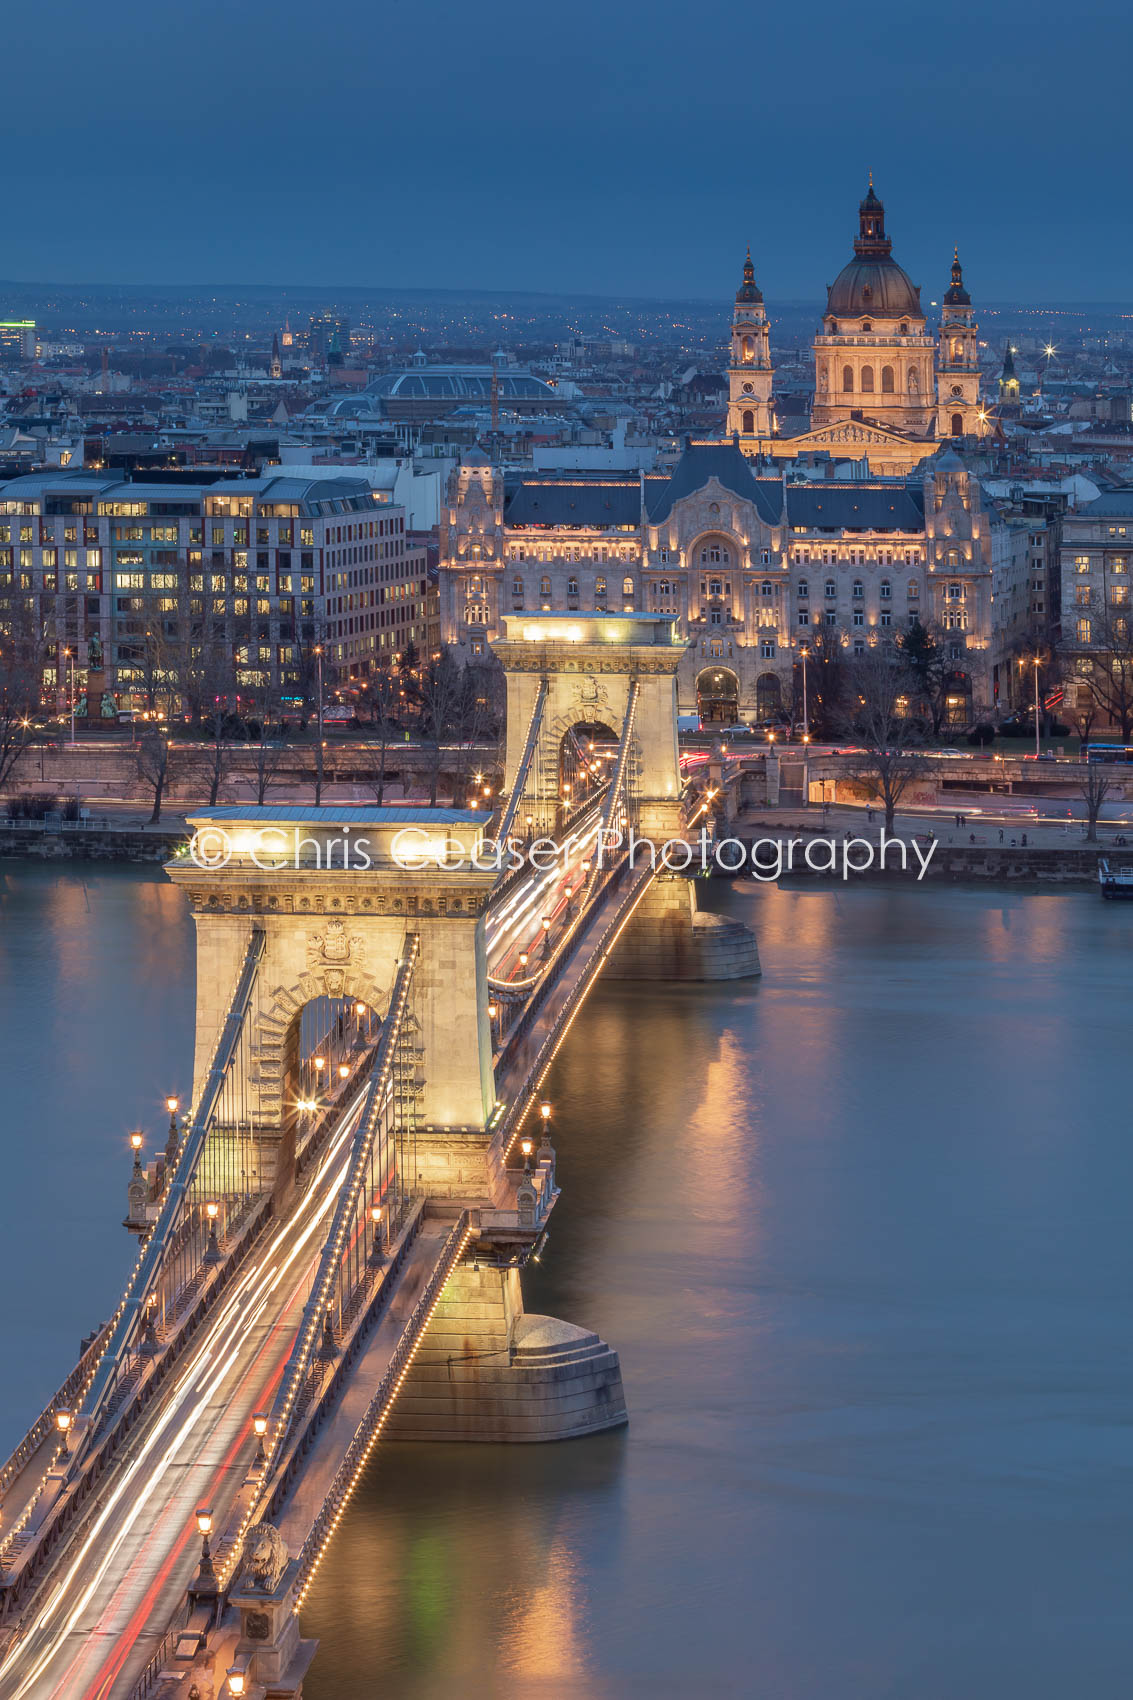 Above The Chain Bridge, Budapest